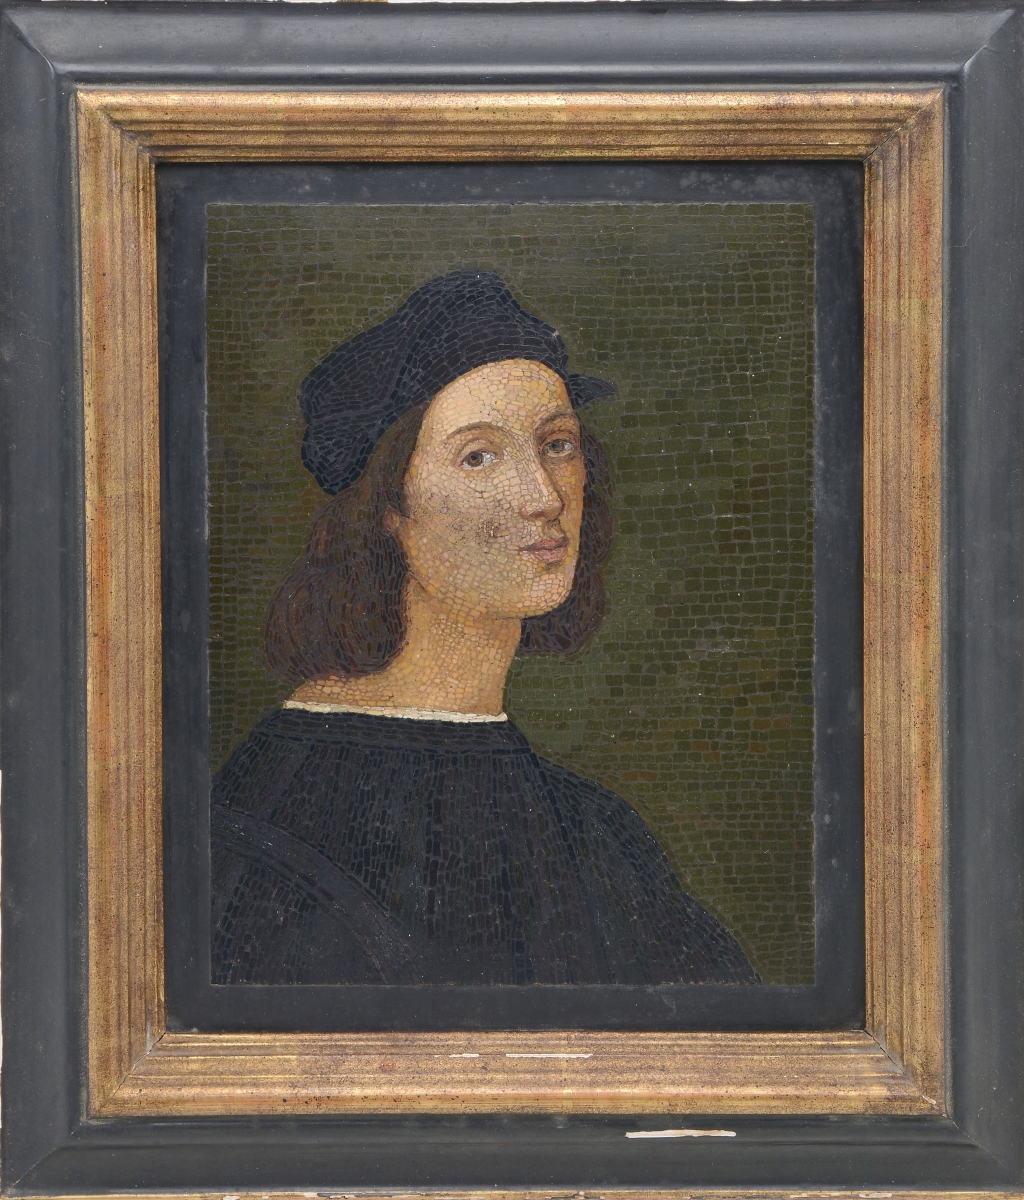 A Vatican Workshop micromosaic plaque of “Raphael” was bid to $15,240.